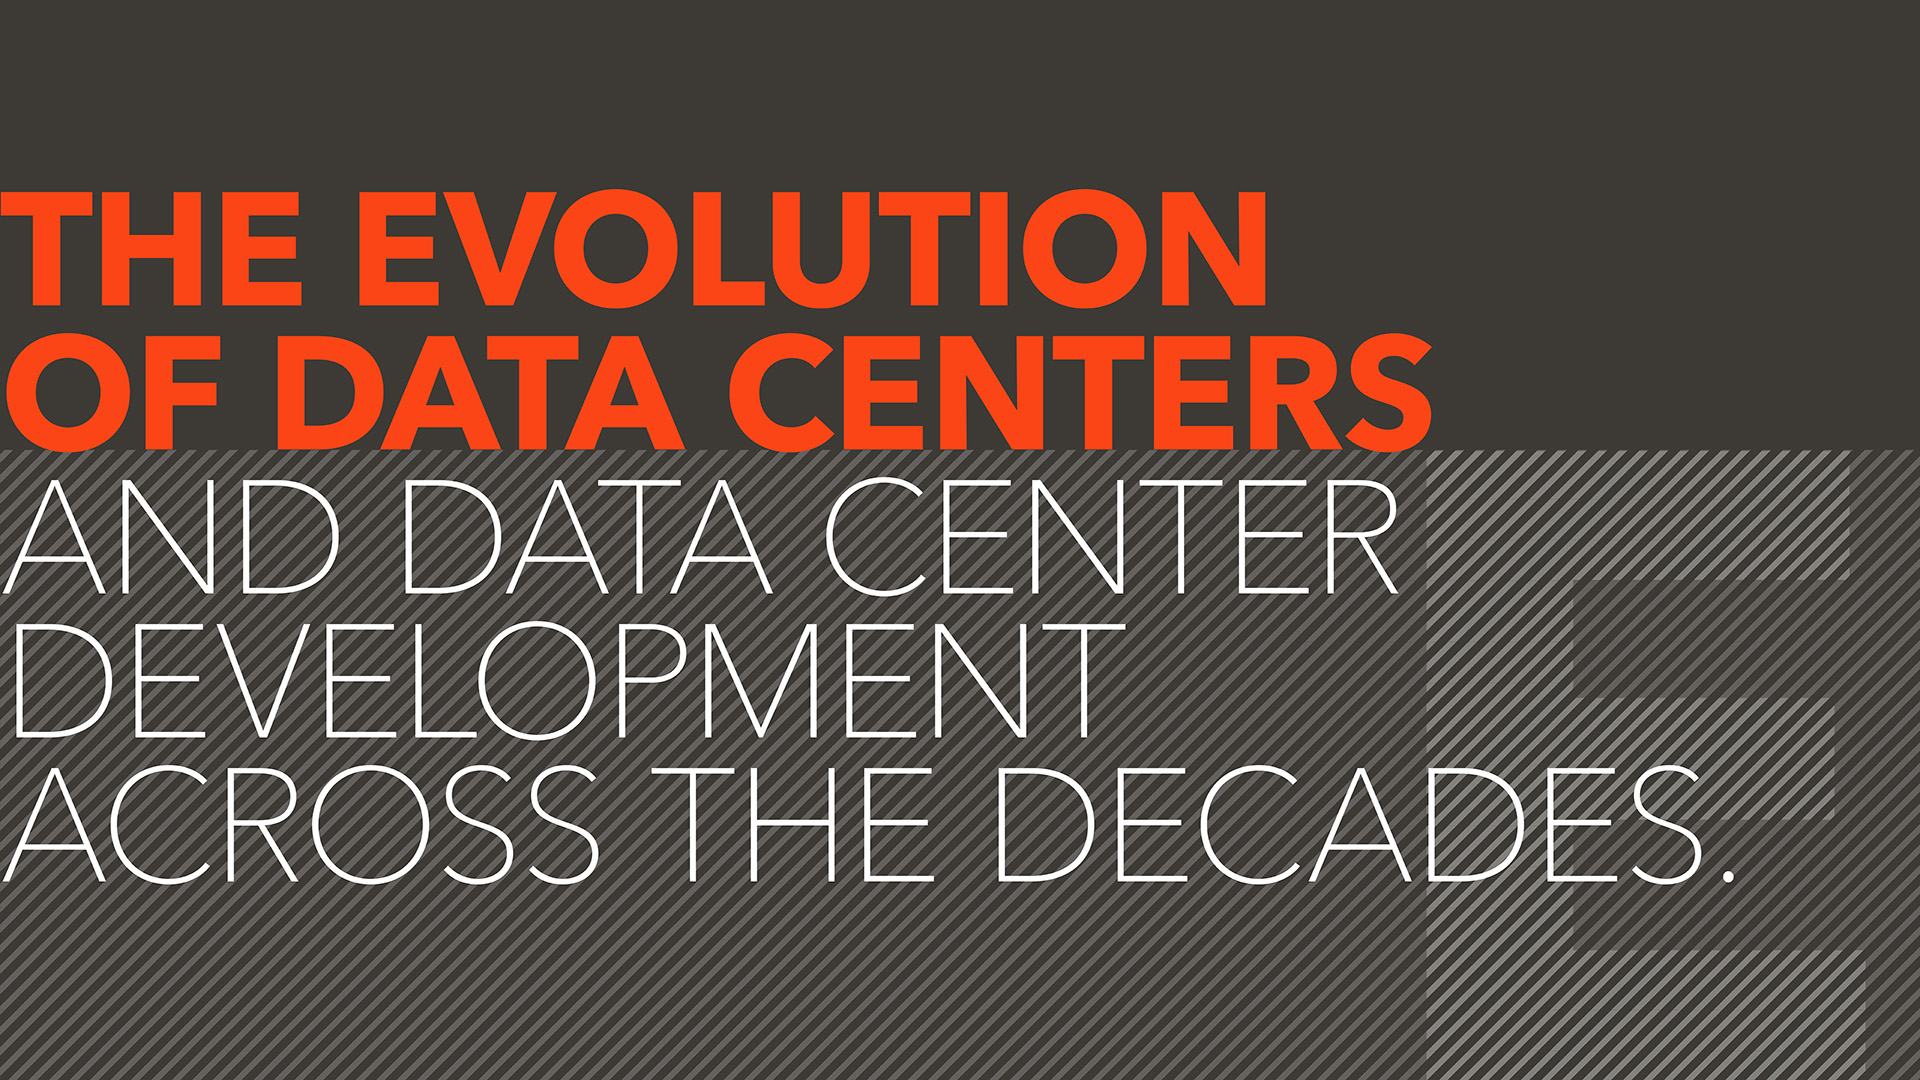 The evolution of data centers / data center development across the decades